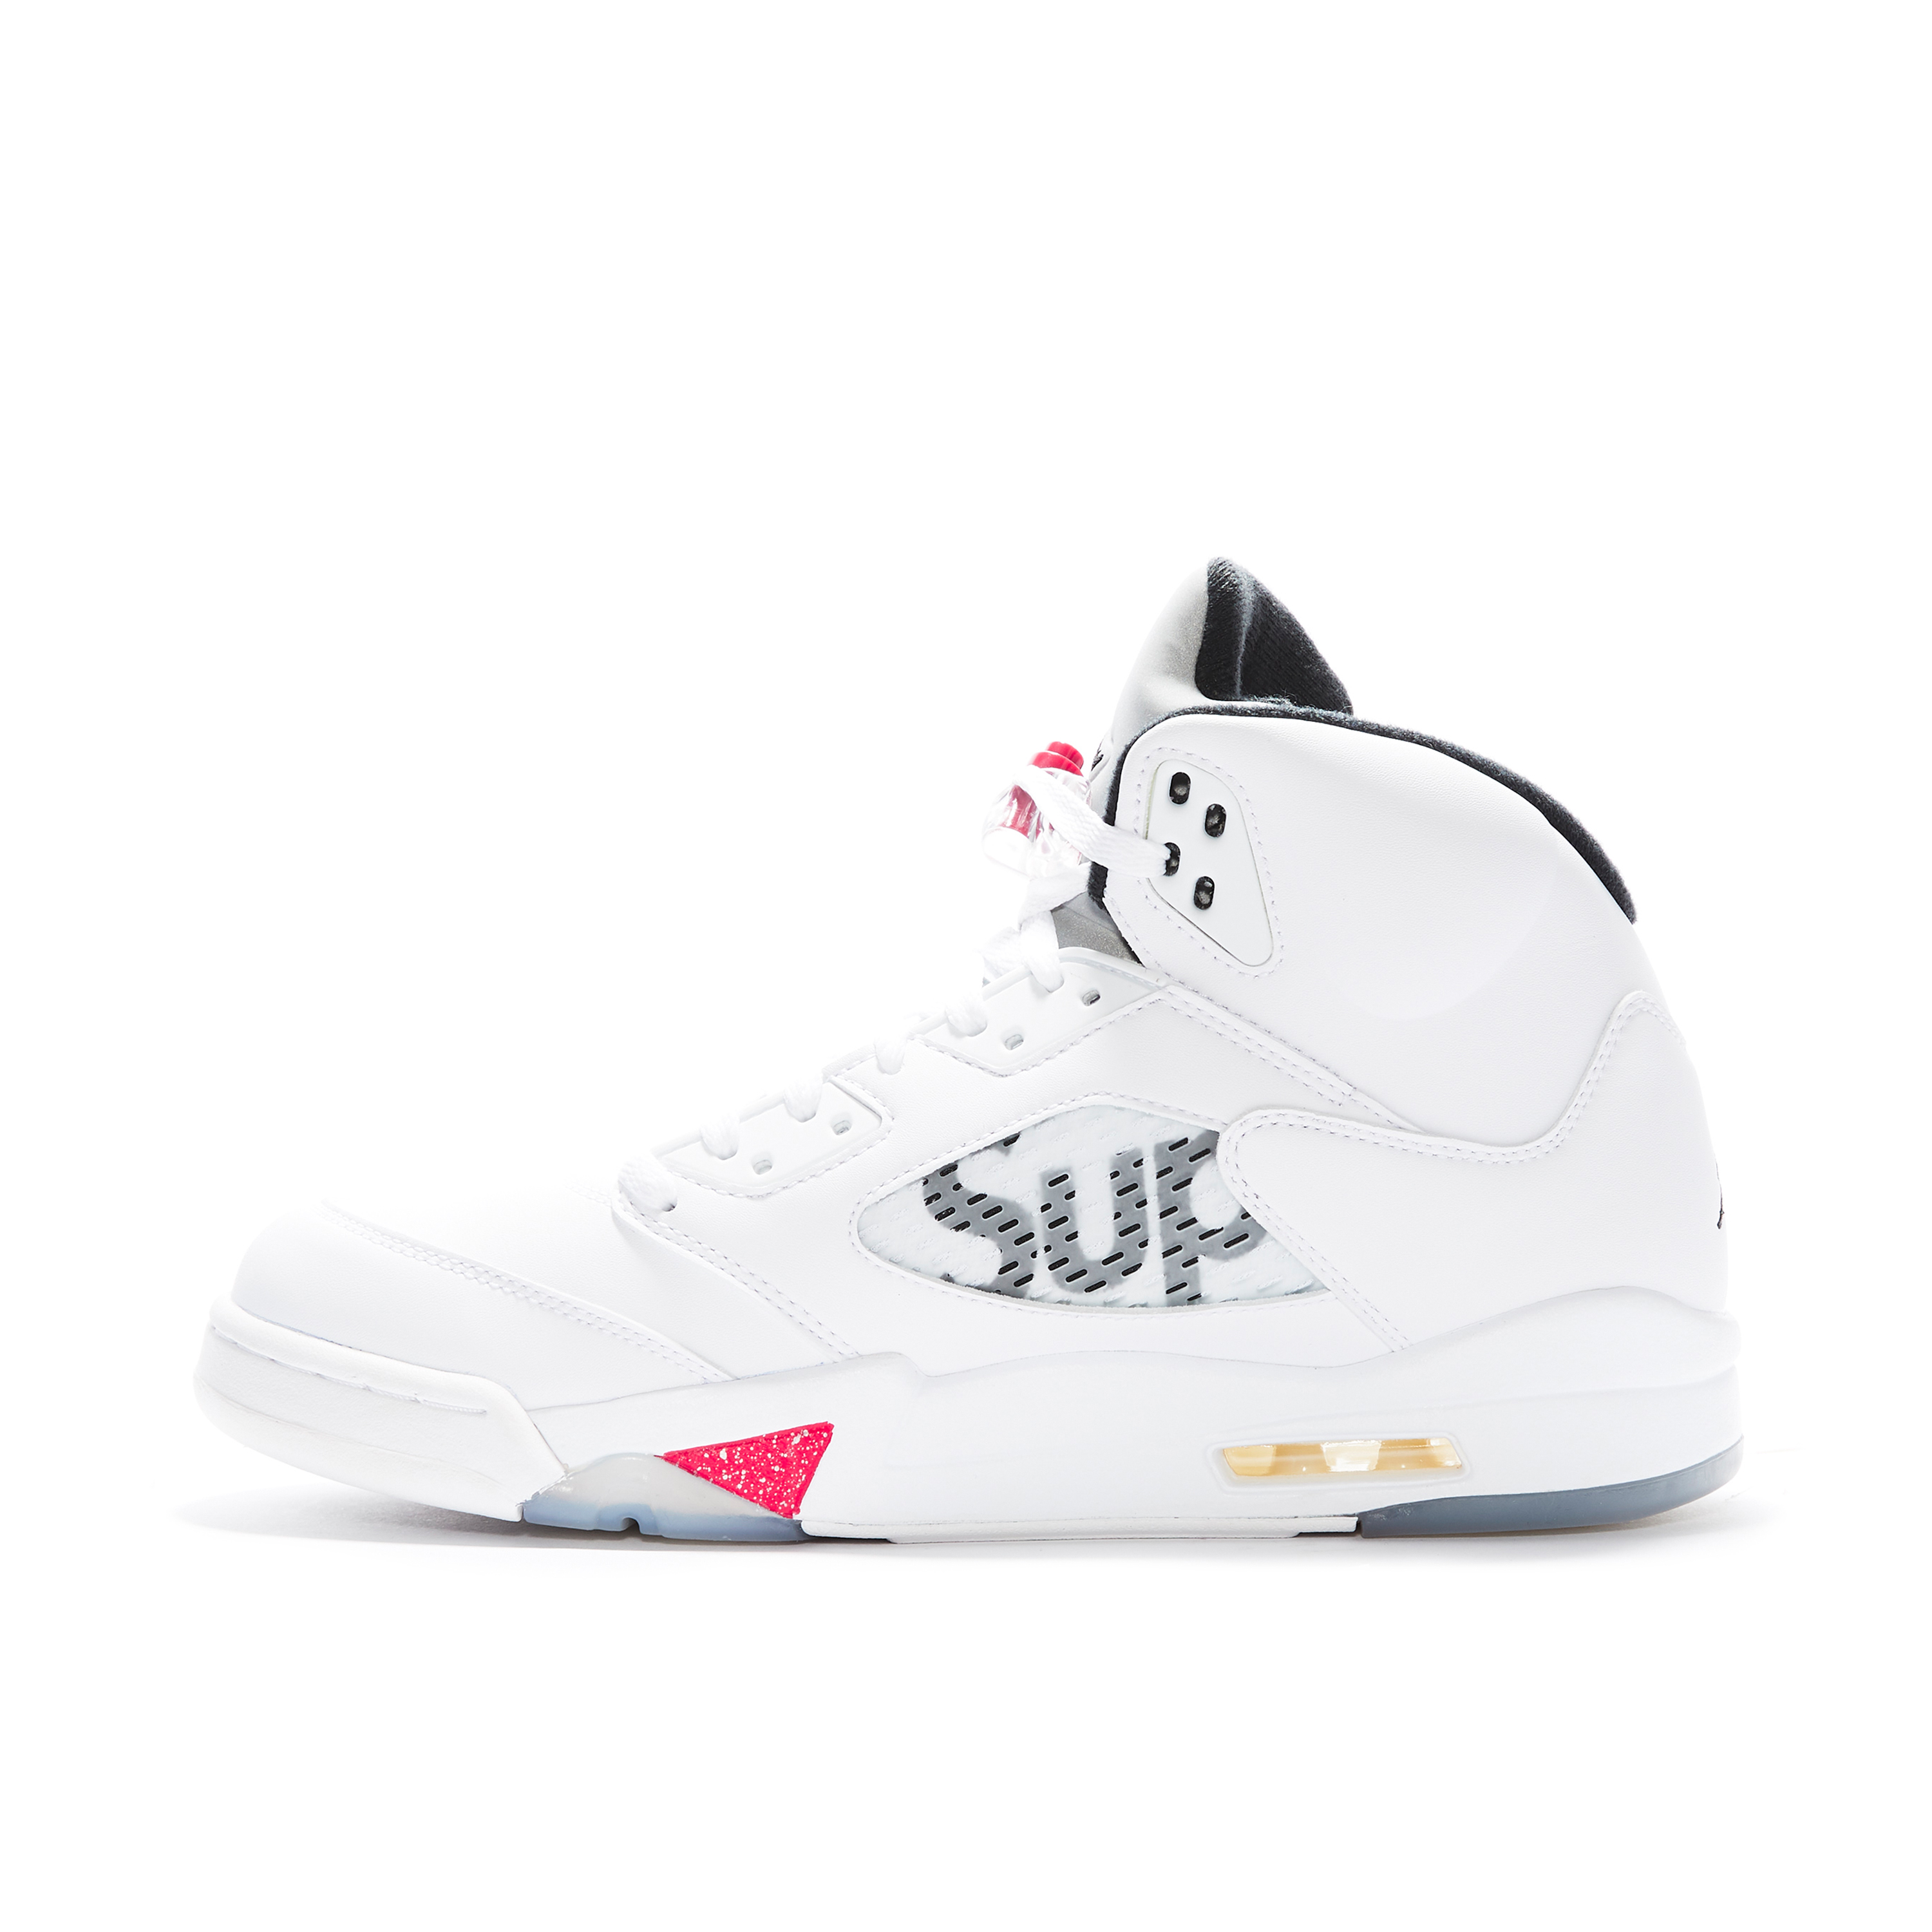 Buy Supreme x Air Jordan 5 Retro 'White' - 824371 101